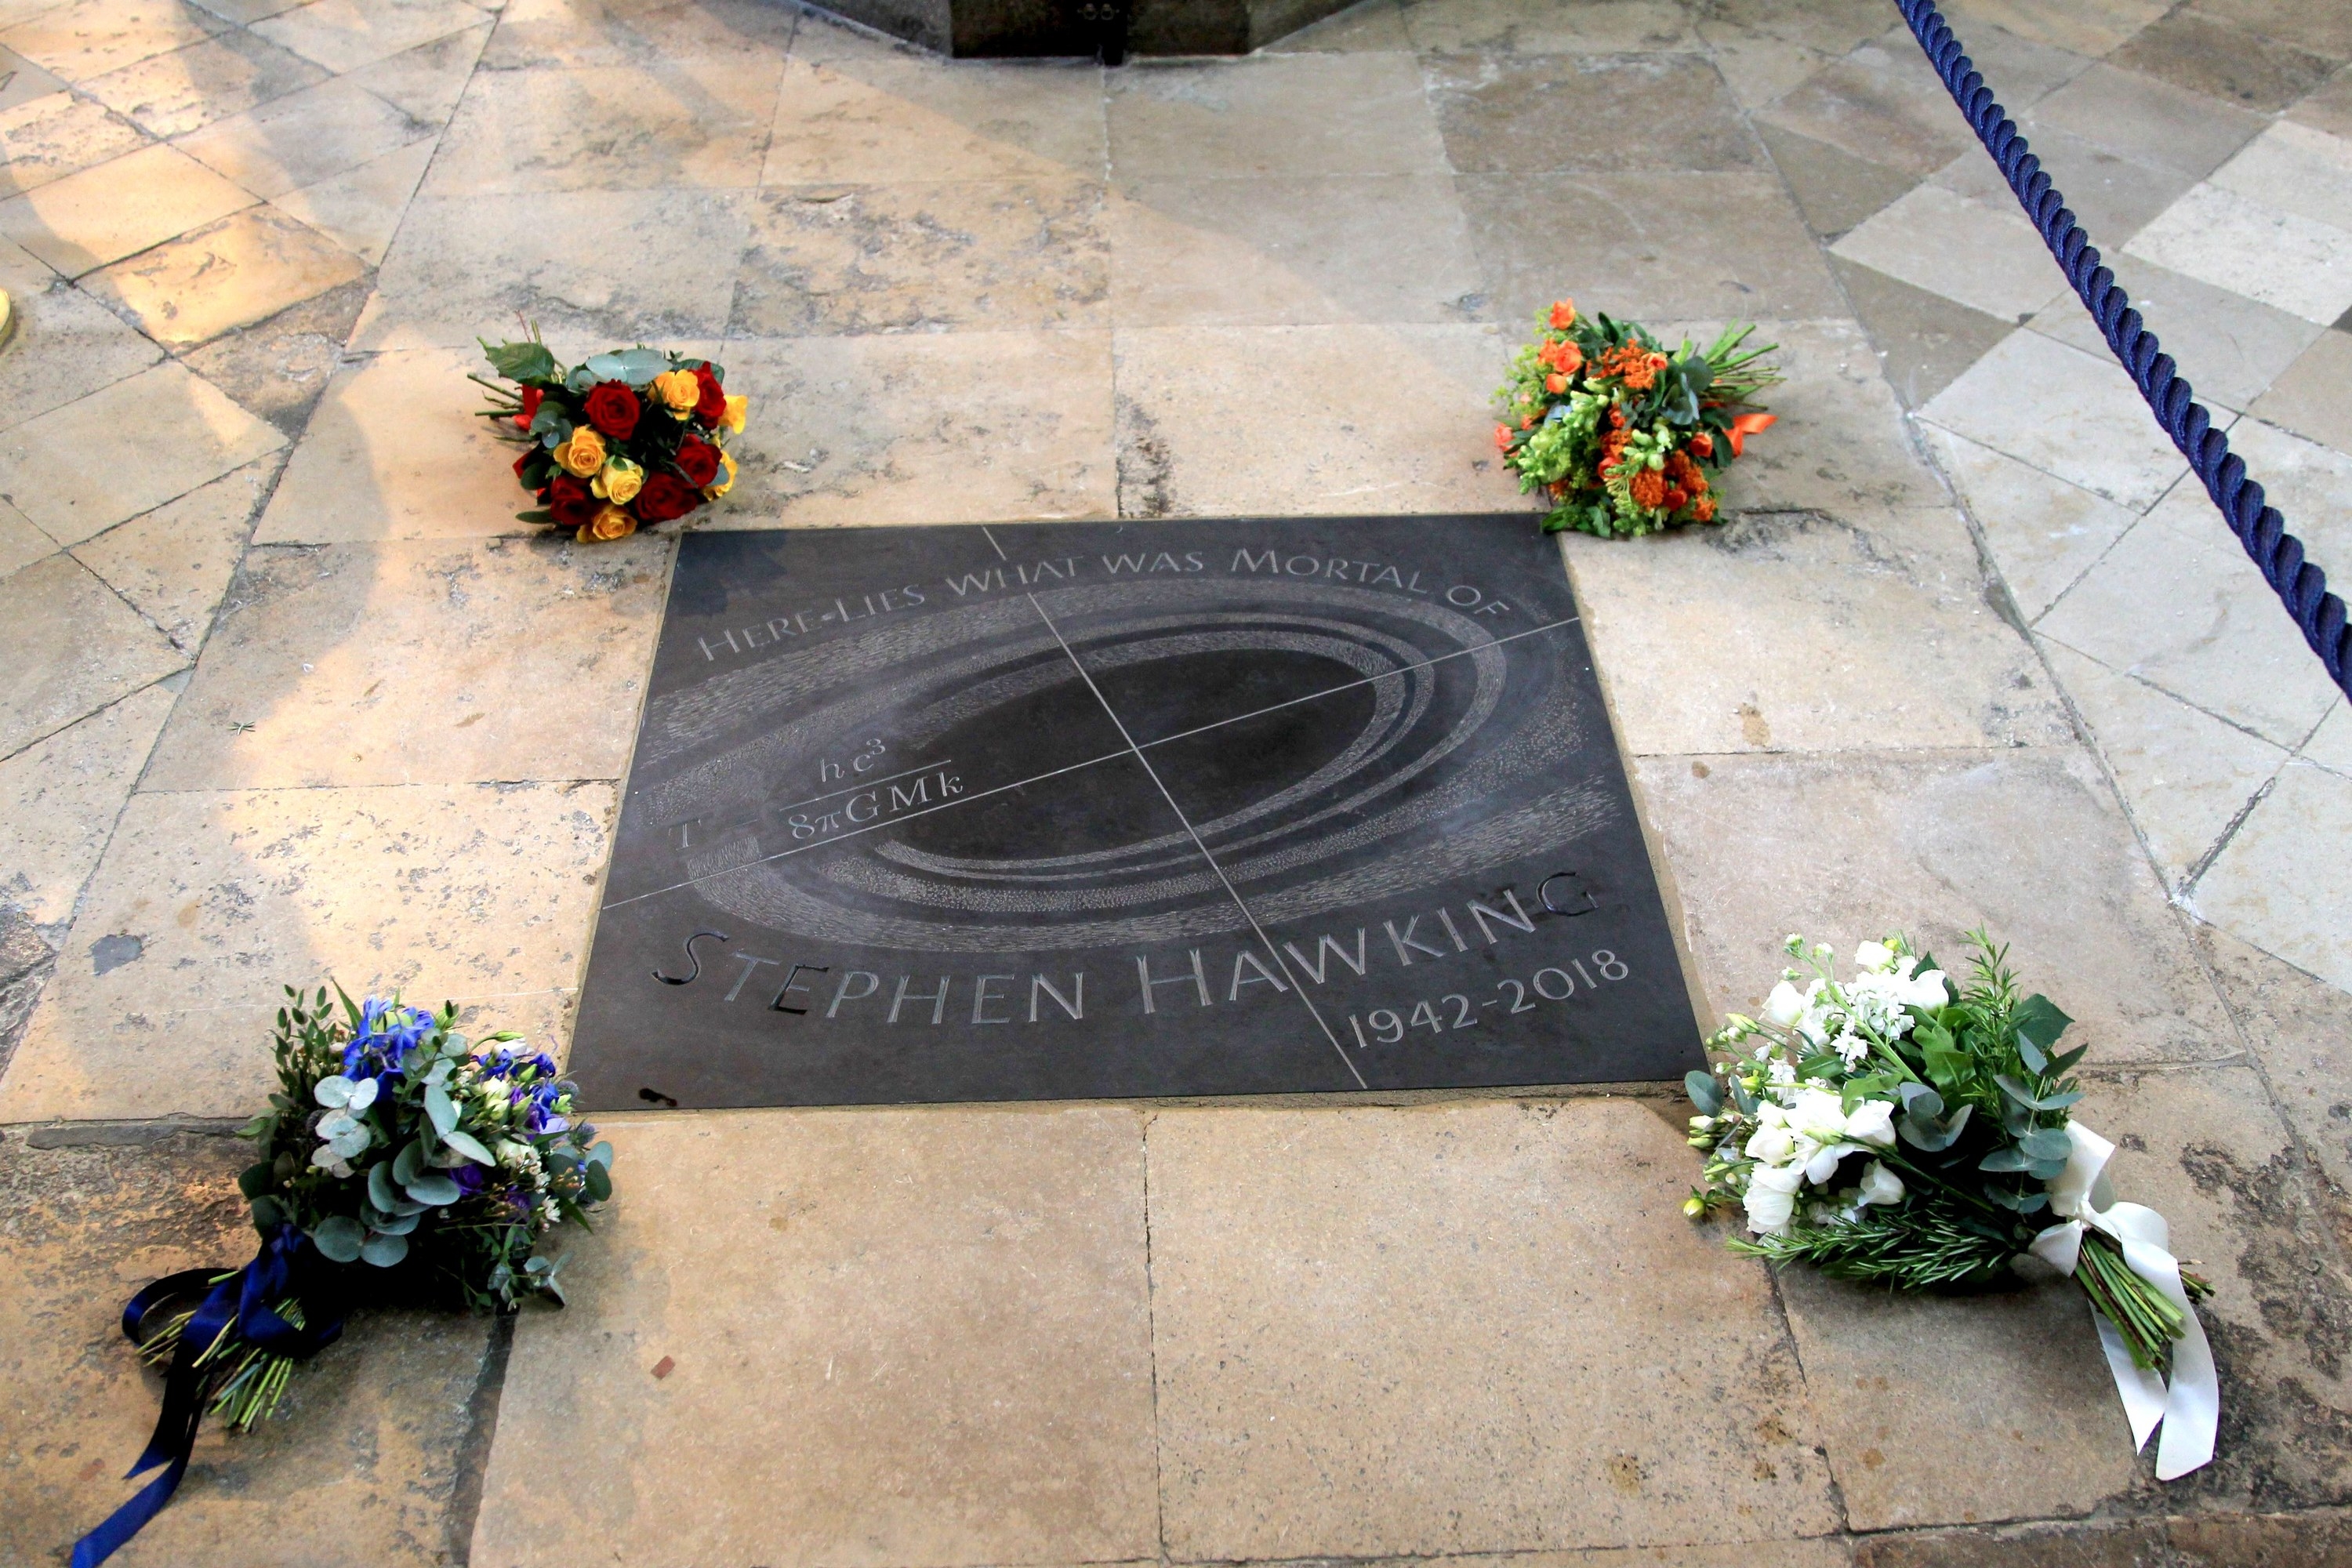 Stephen Hawking&#x27;s grave